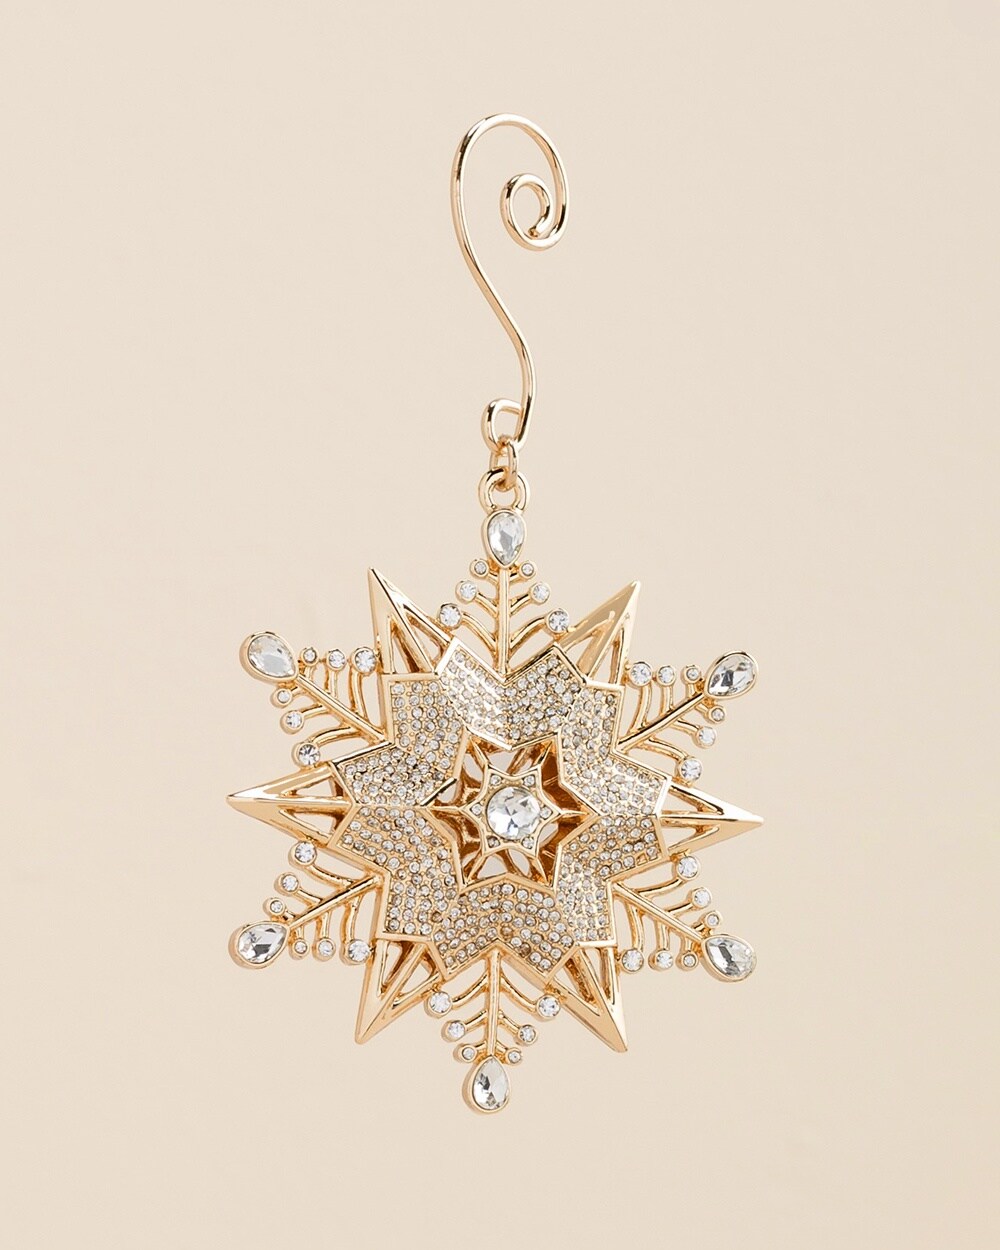 Goldtone Snowflake Ornament